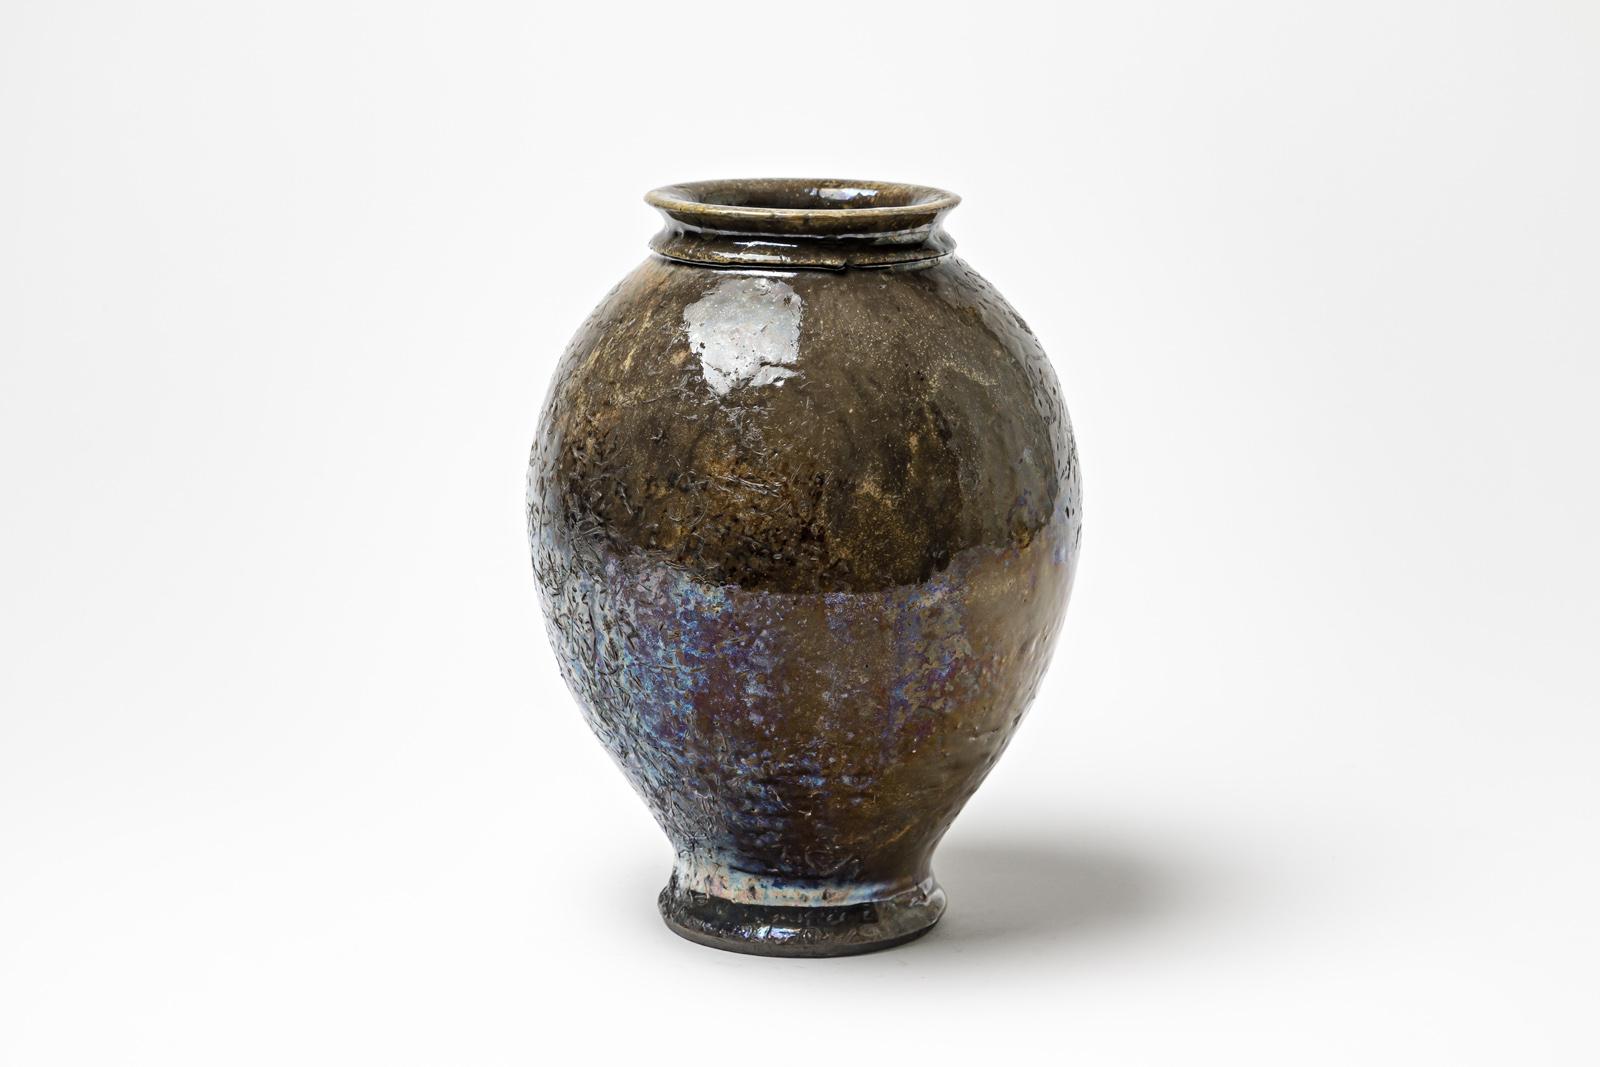 Brown glazed ceramic vase with metallic highlights by Gisèle Buthod Garçon. Raku fired. Artist monogram under the base. Circa 1980-1990.
H : 10.6’ x 7.1’ inches.
